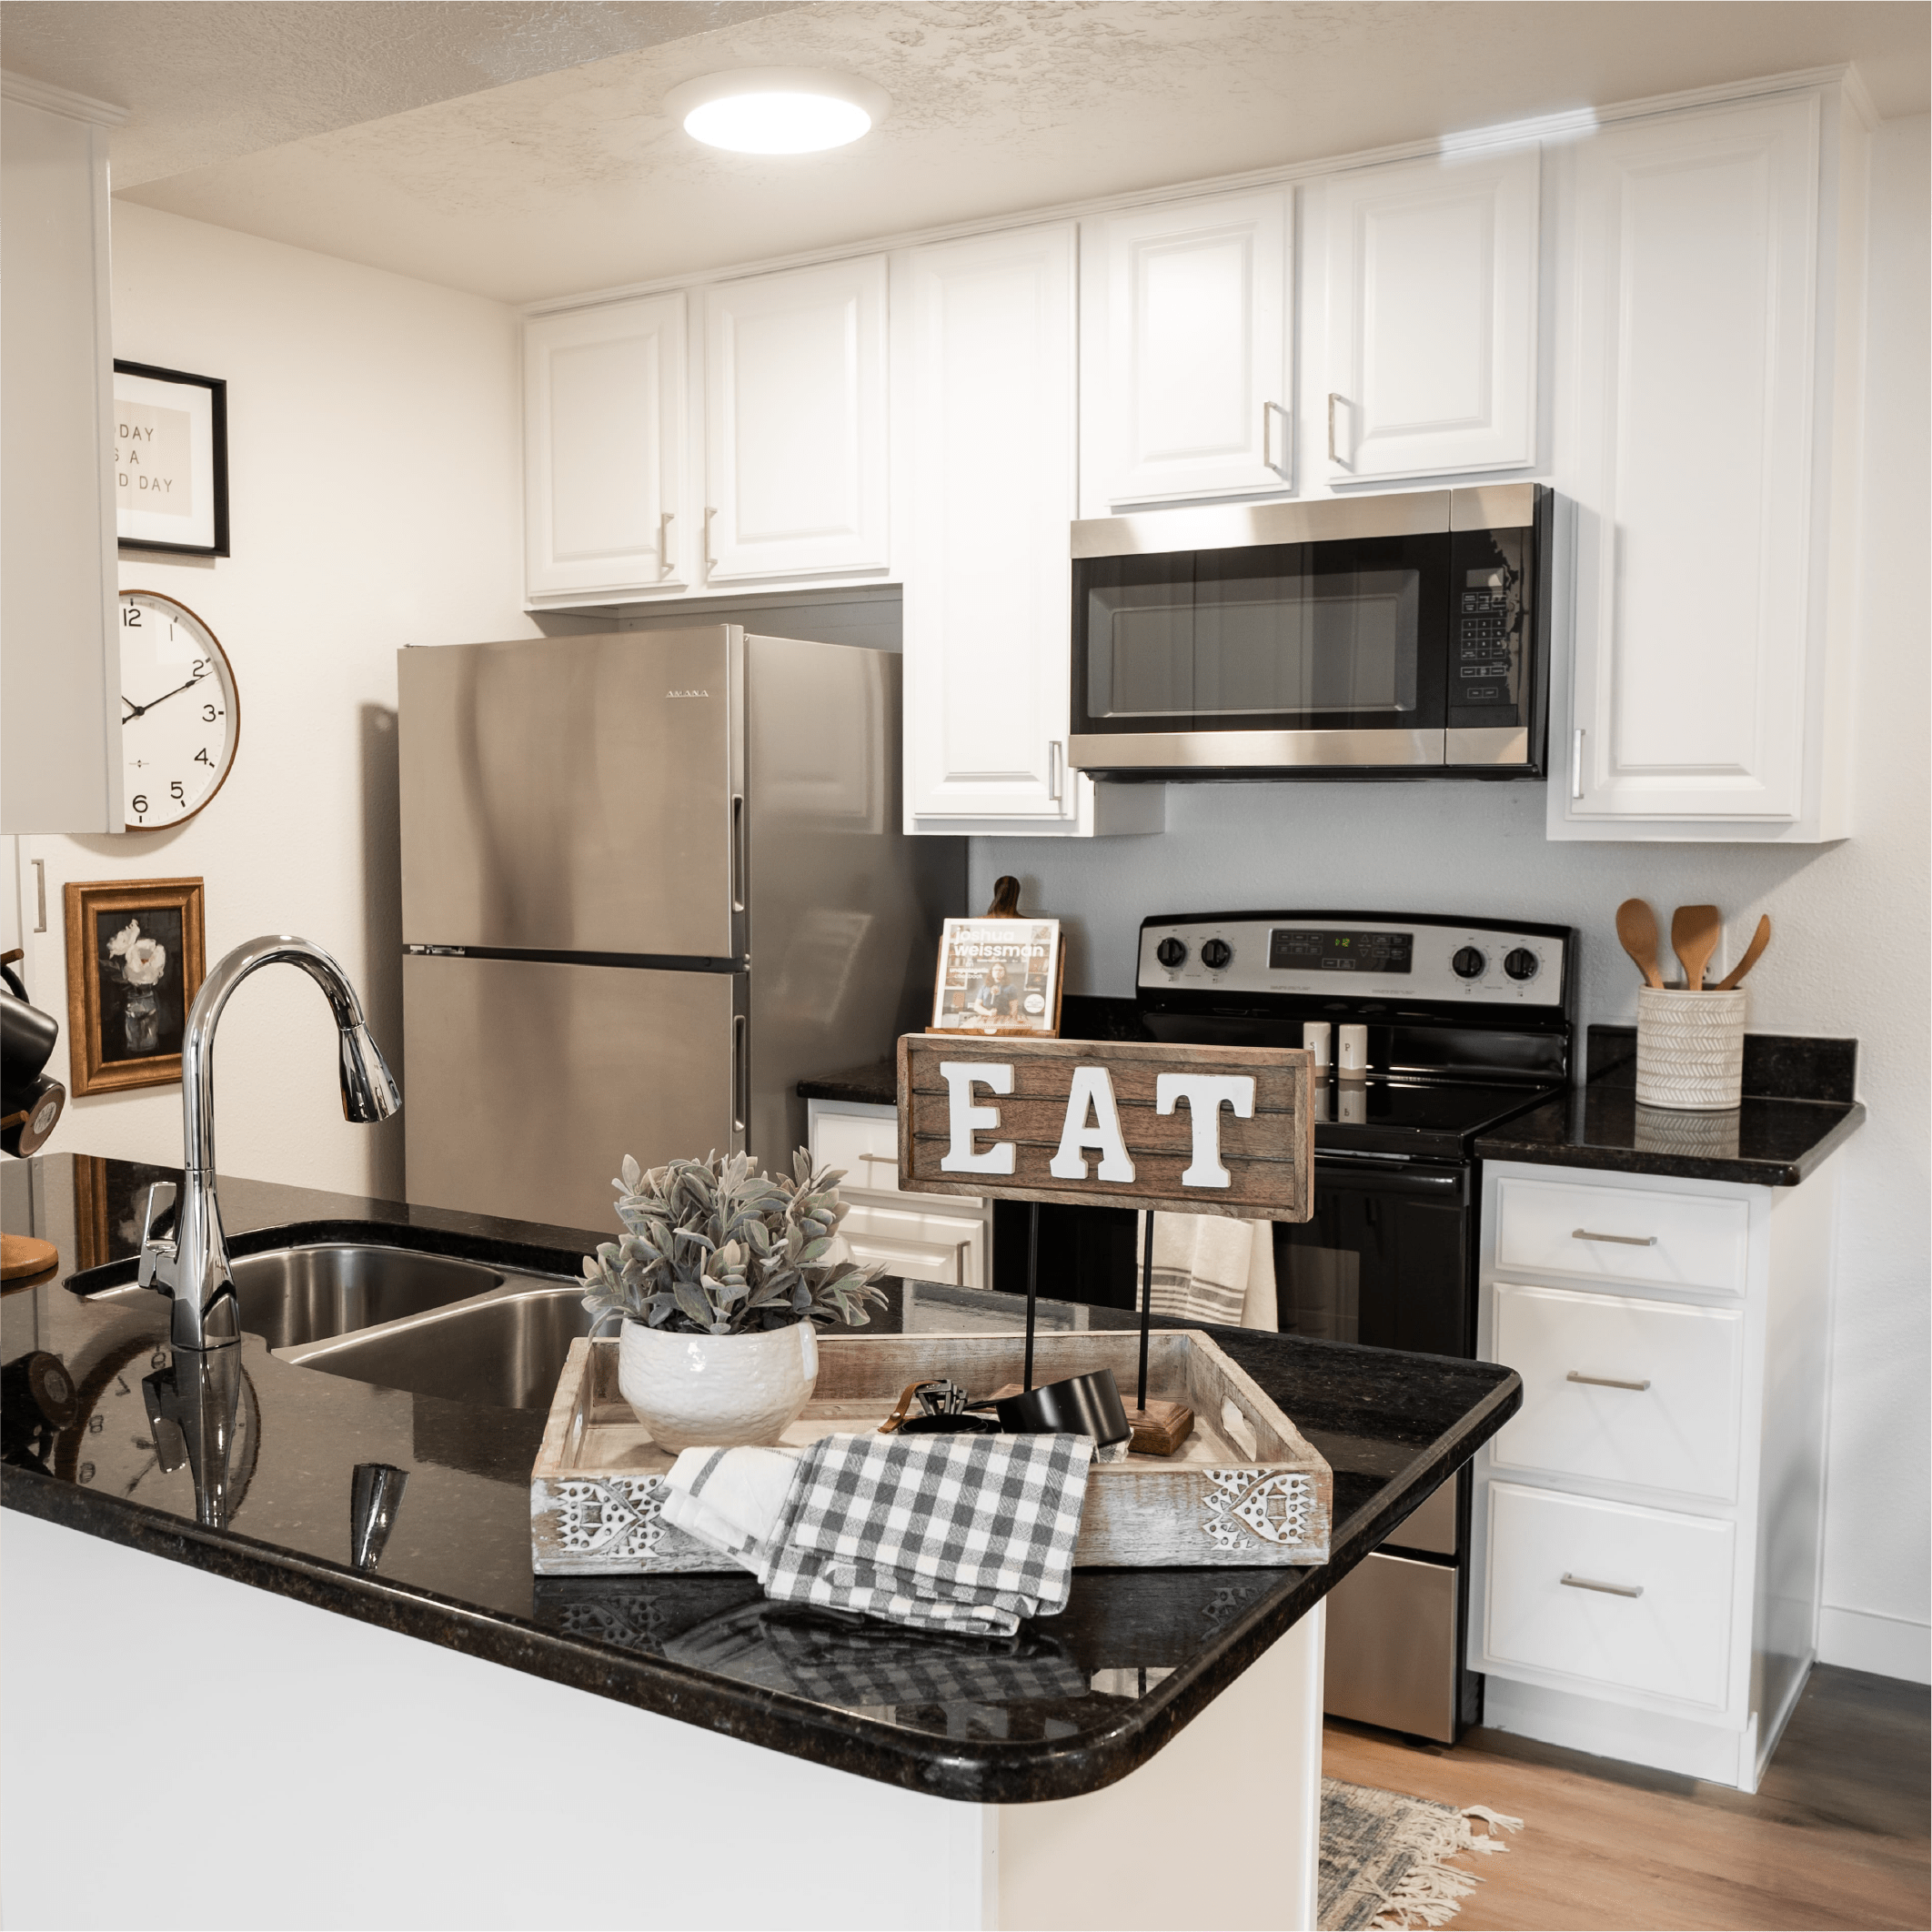 Furnished Apartment Kitchen